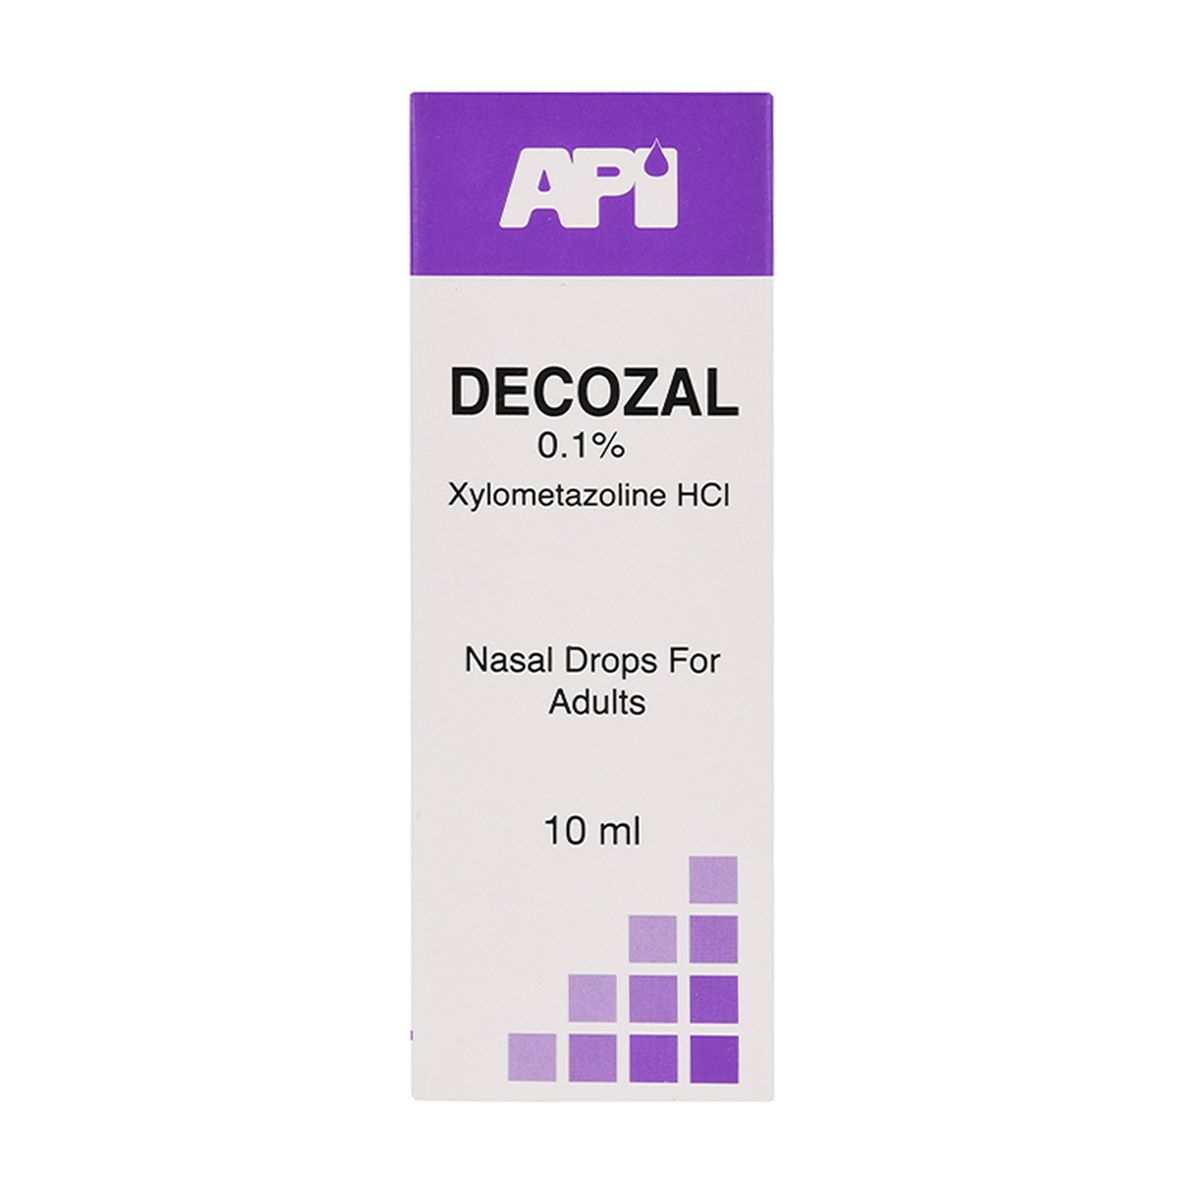 DECOZAL Decozal 0.1% Nasal Drops 10ml